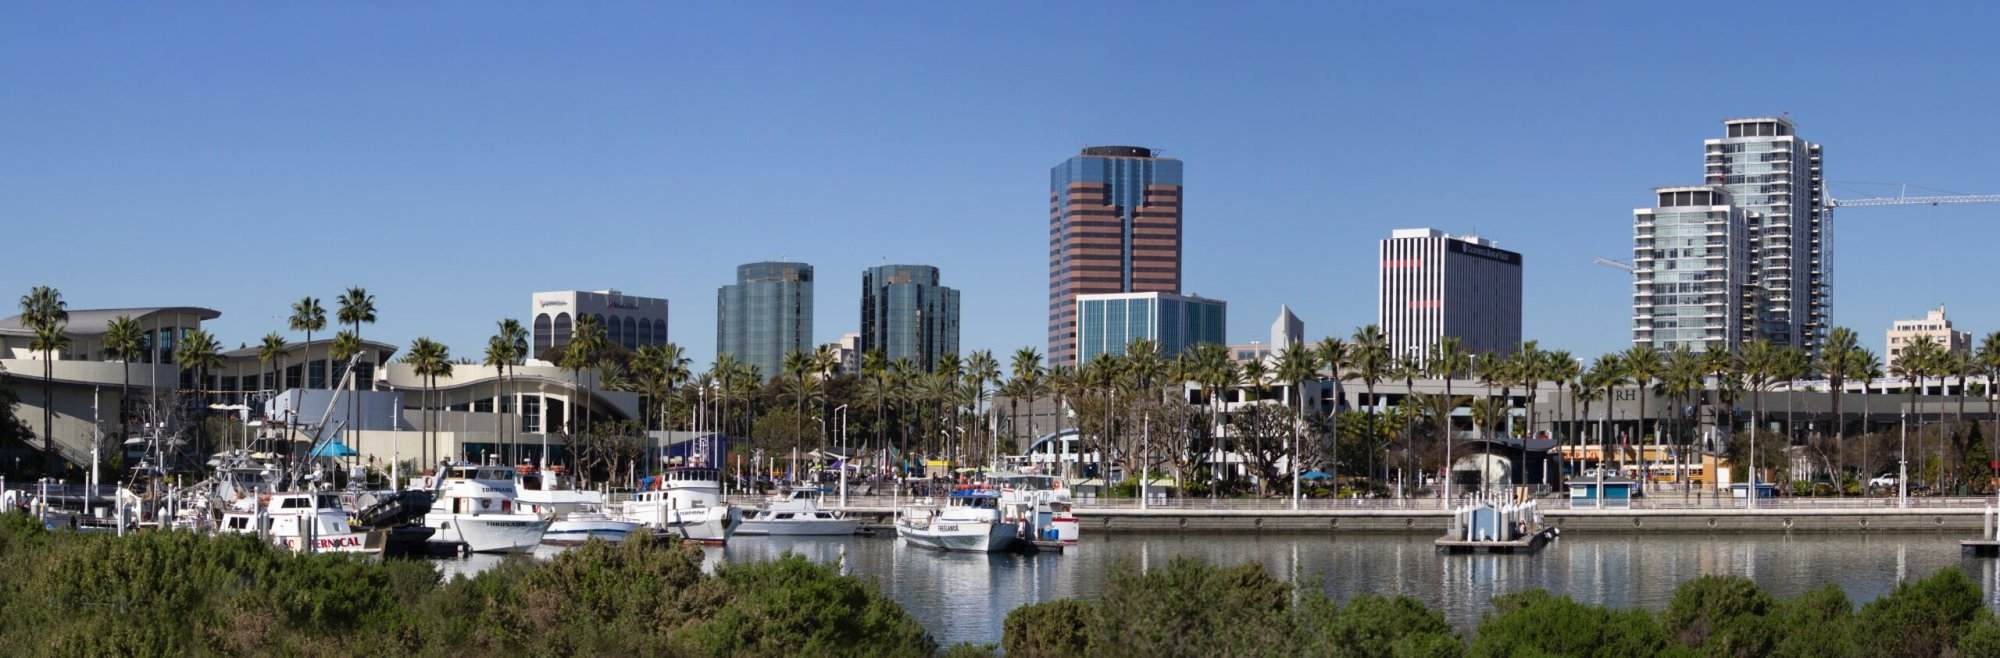 Long Beach California marina view